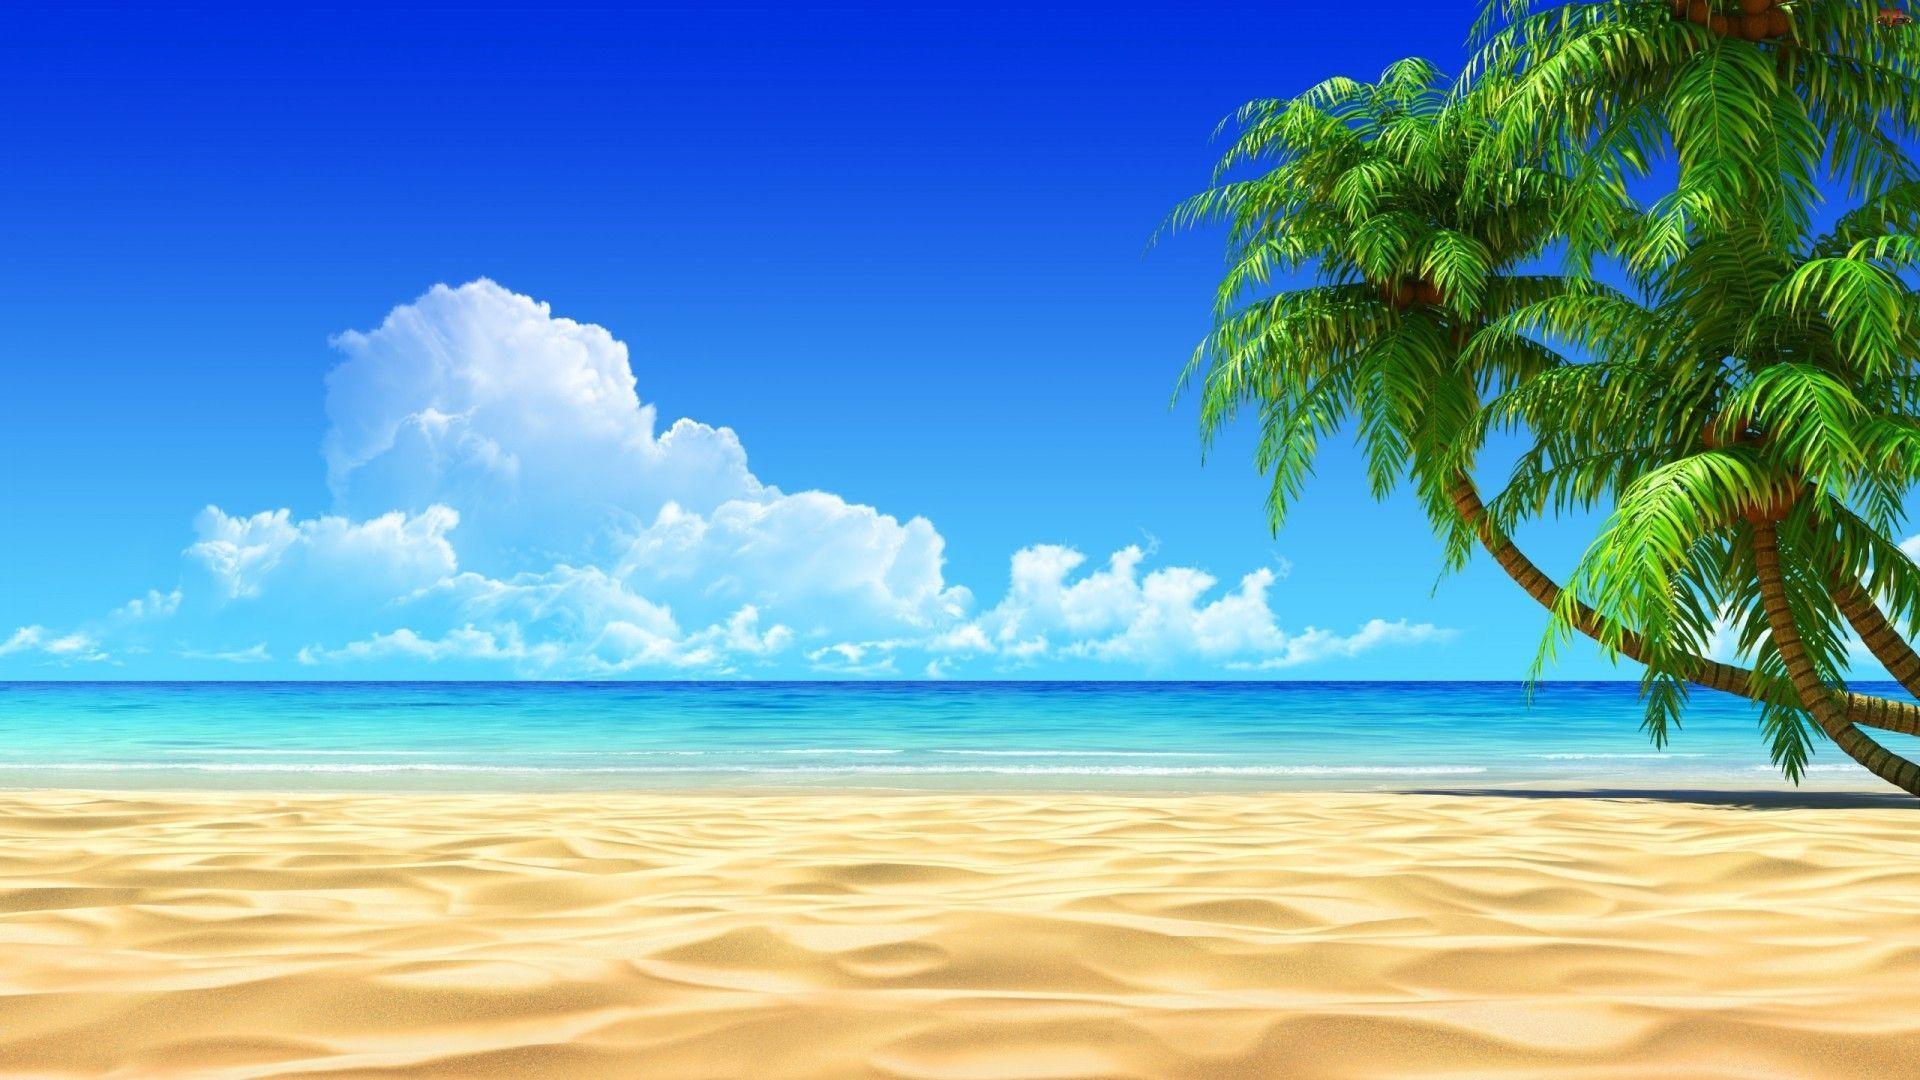 Beach Background For Desktop